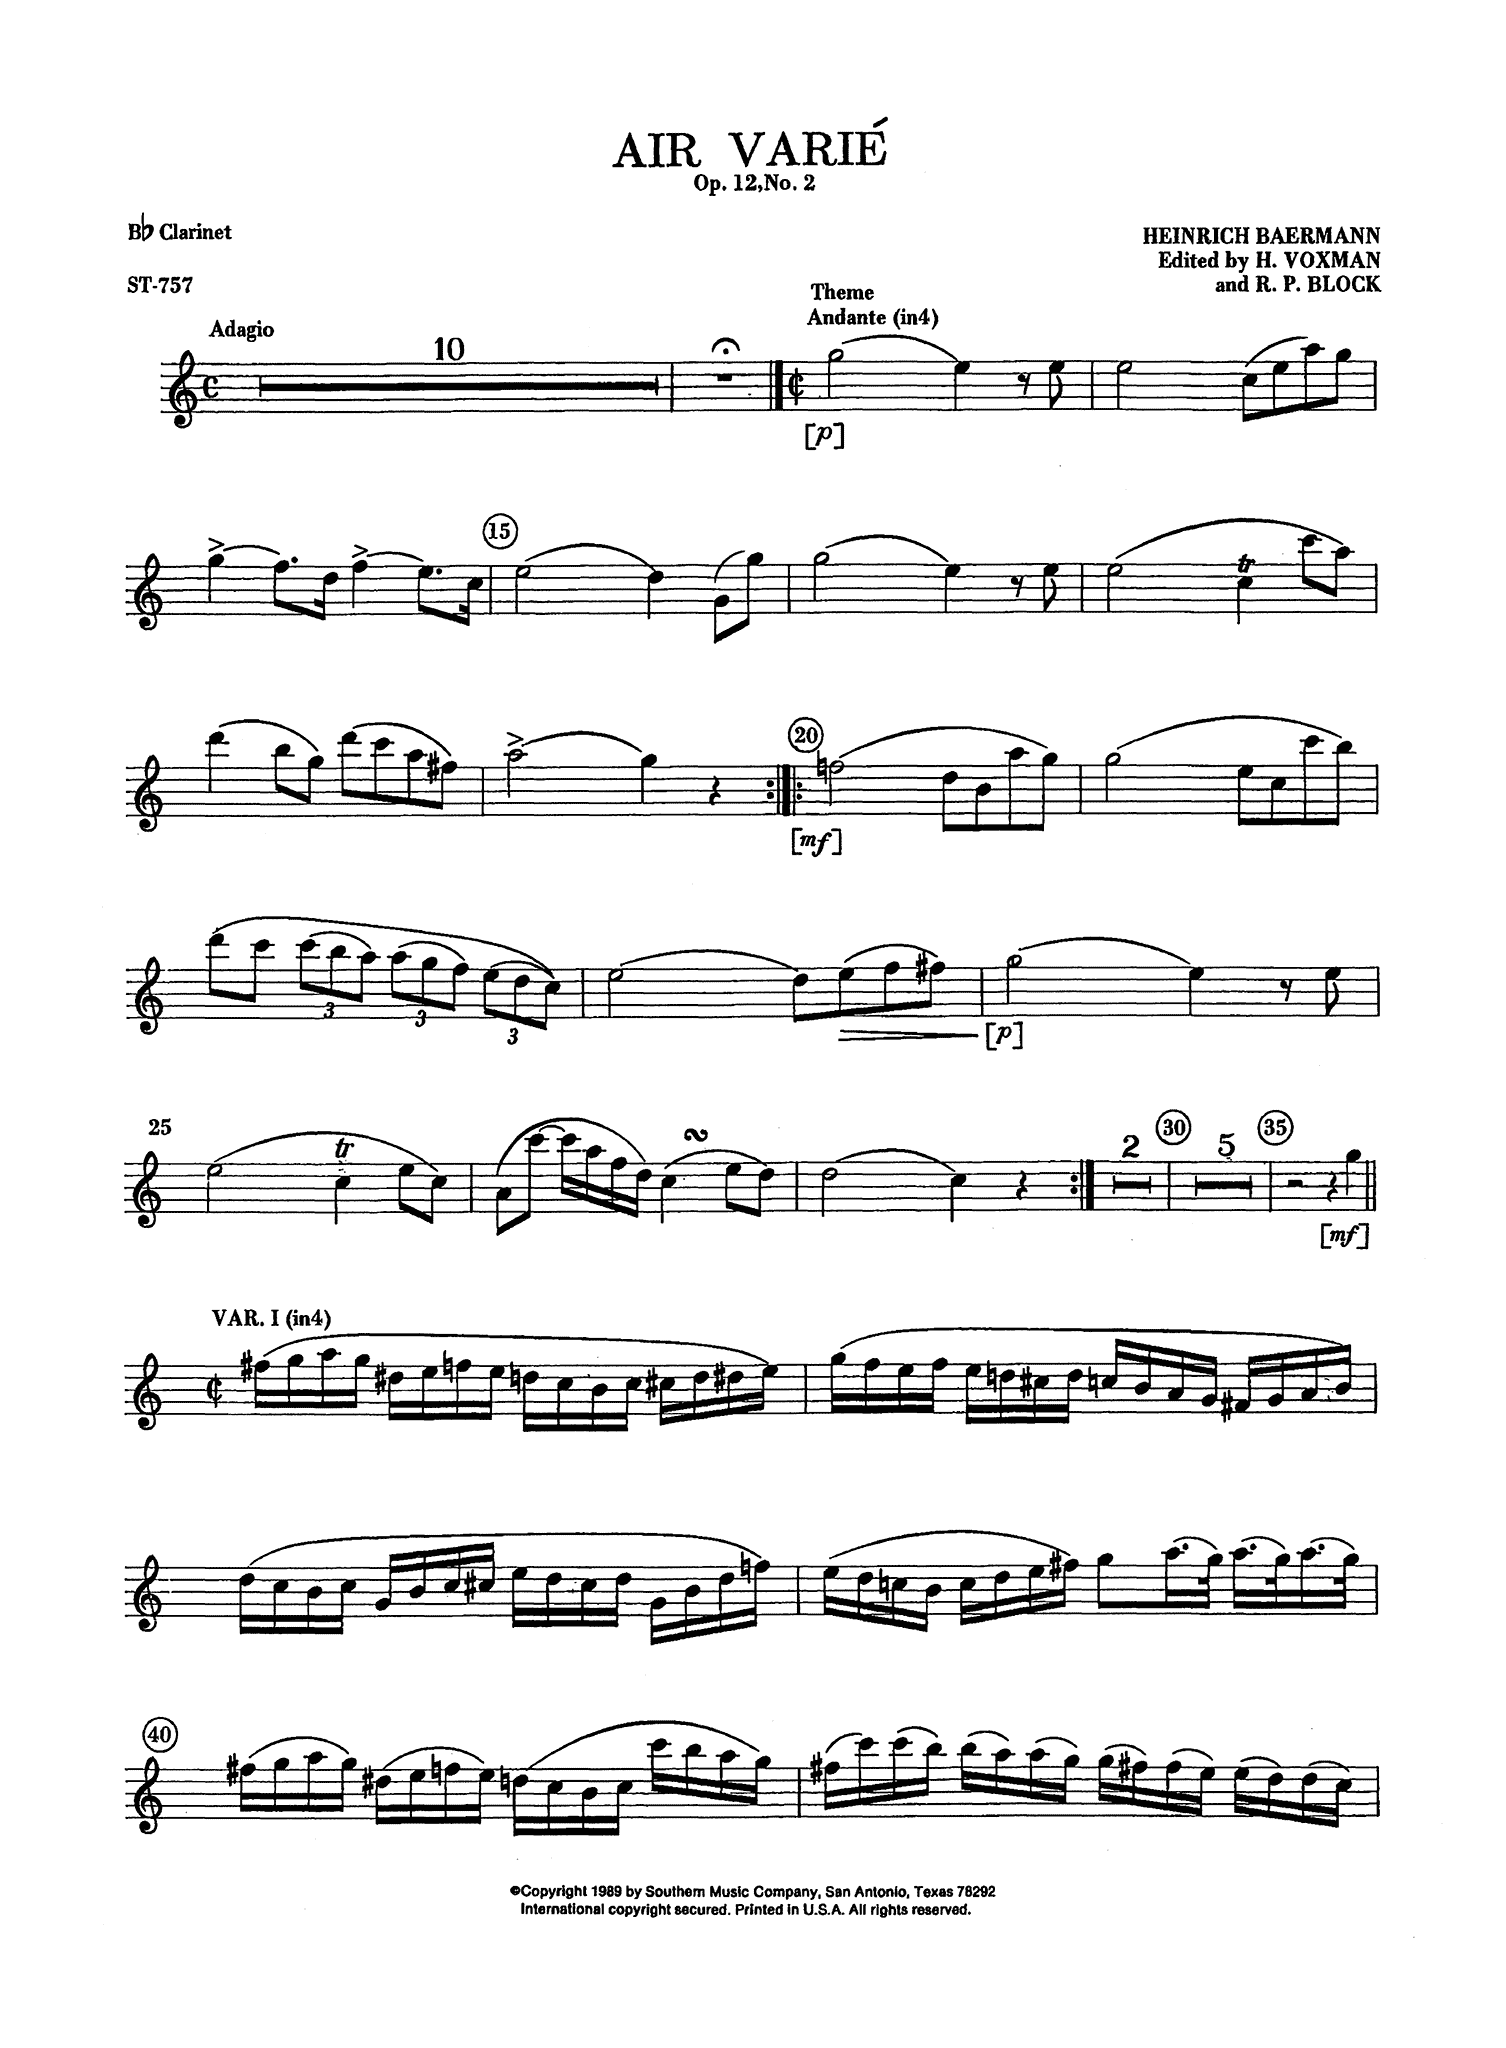 Baermann, Heinrich: Air varié, Op. 12 No. 2 clarinet and piano solo part